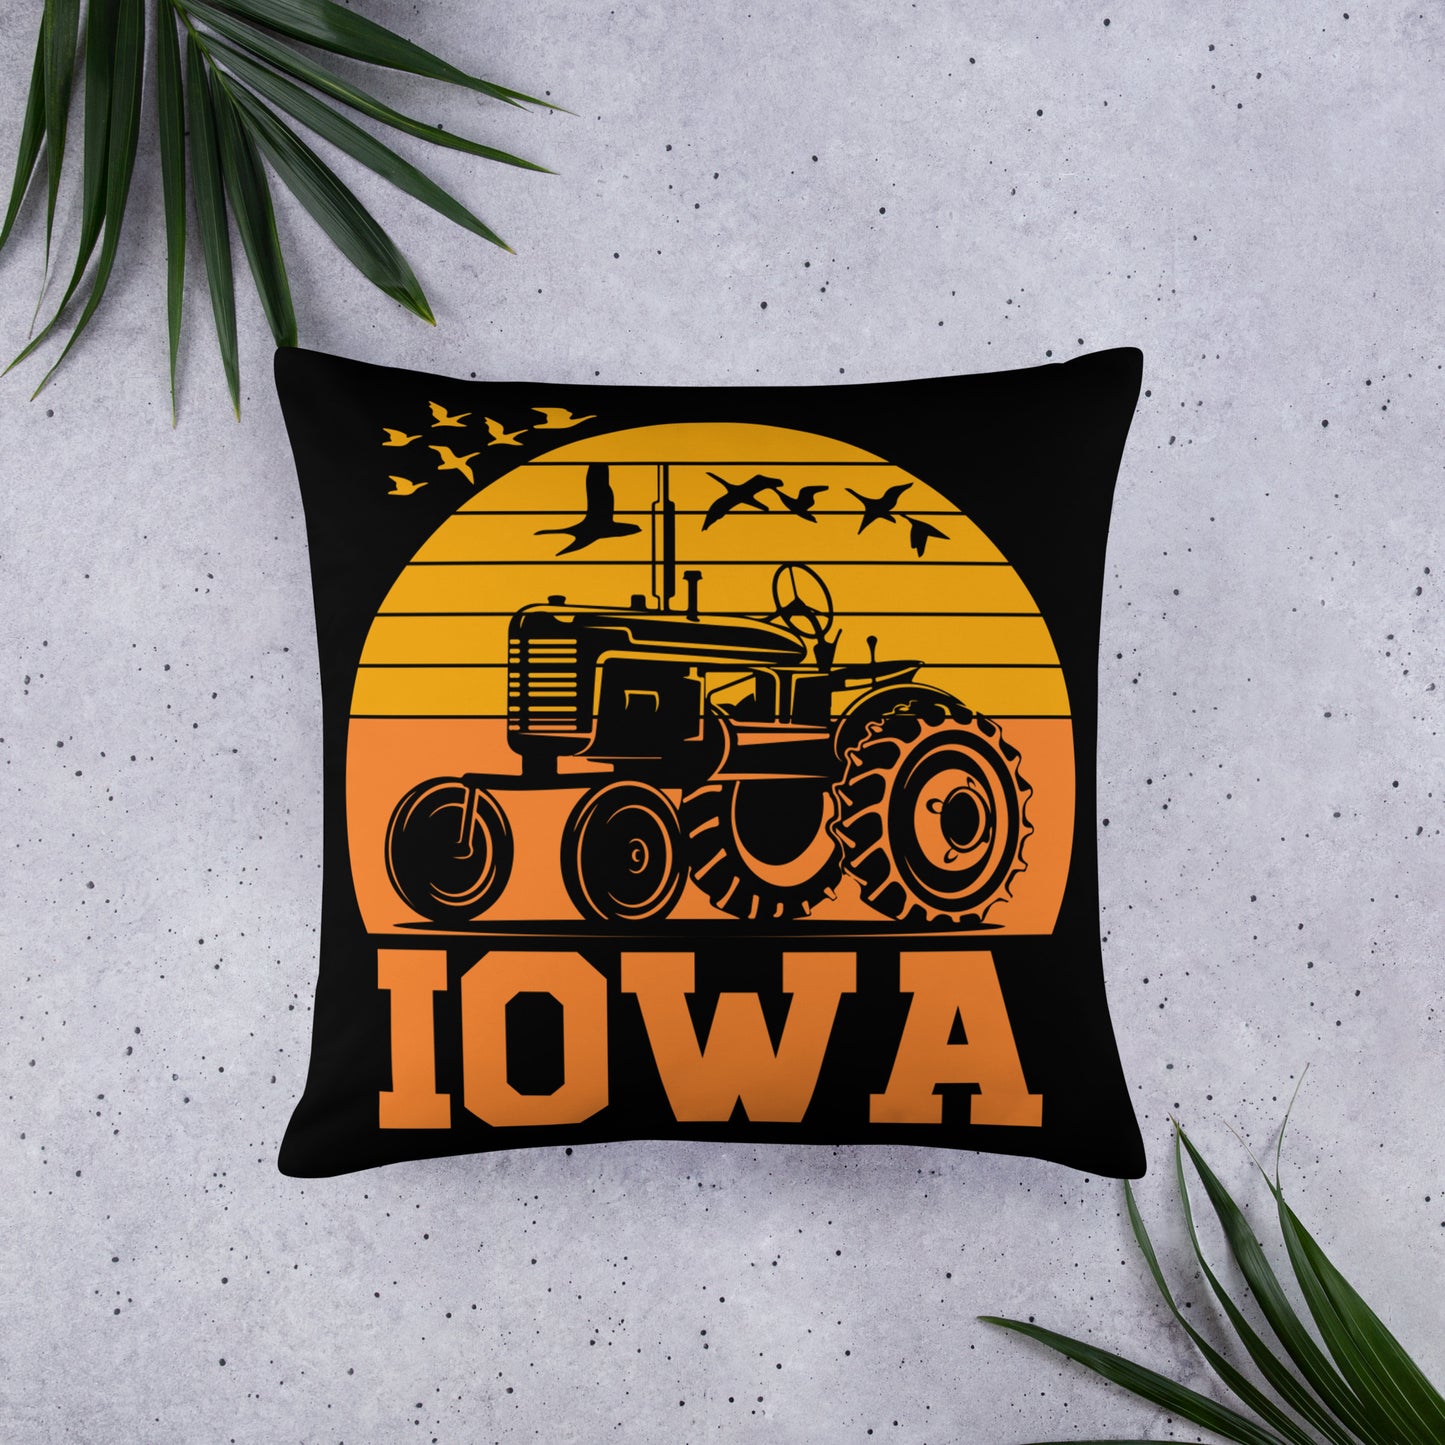 Iowa Tractor Throw Pillow